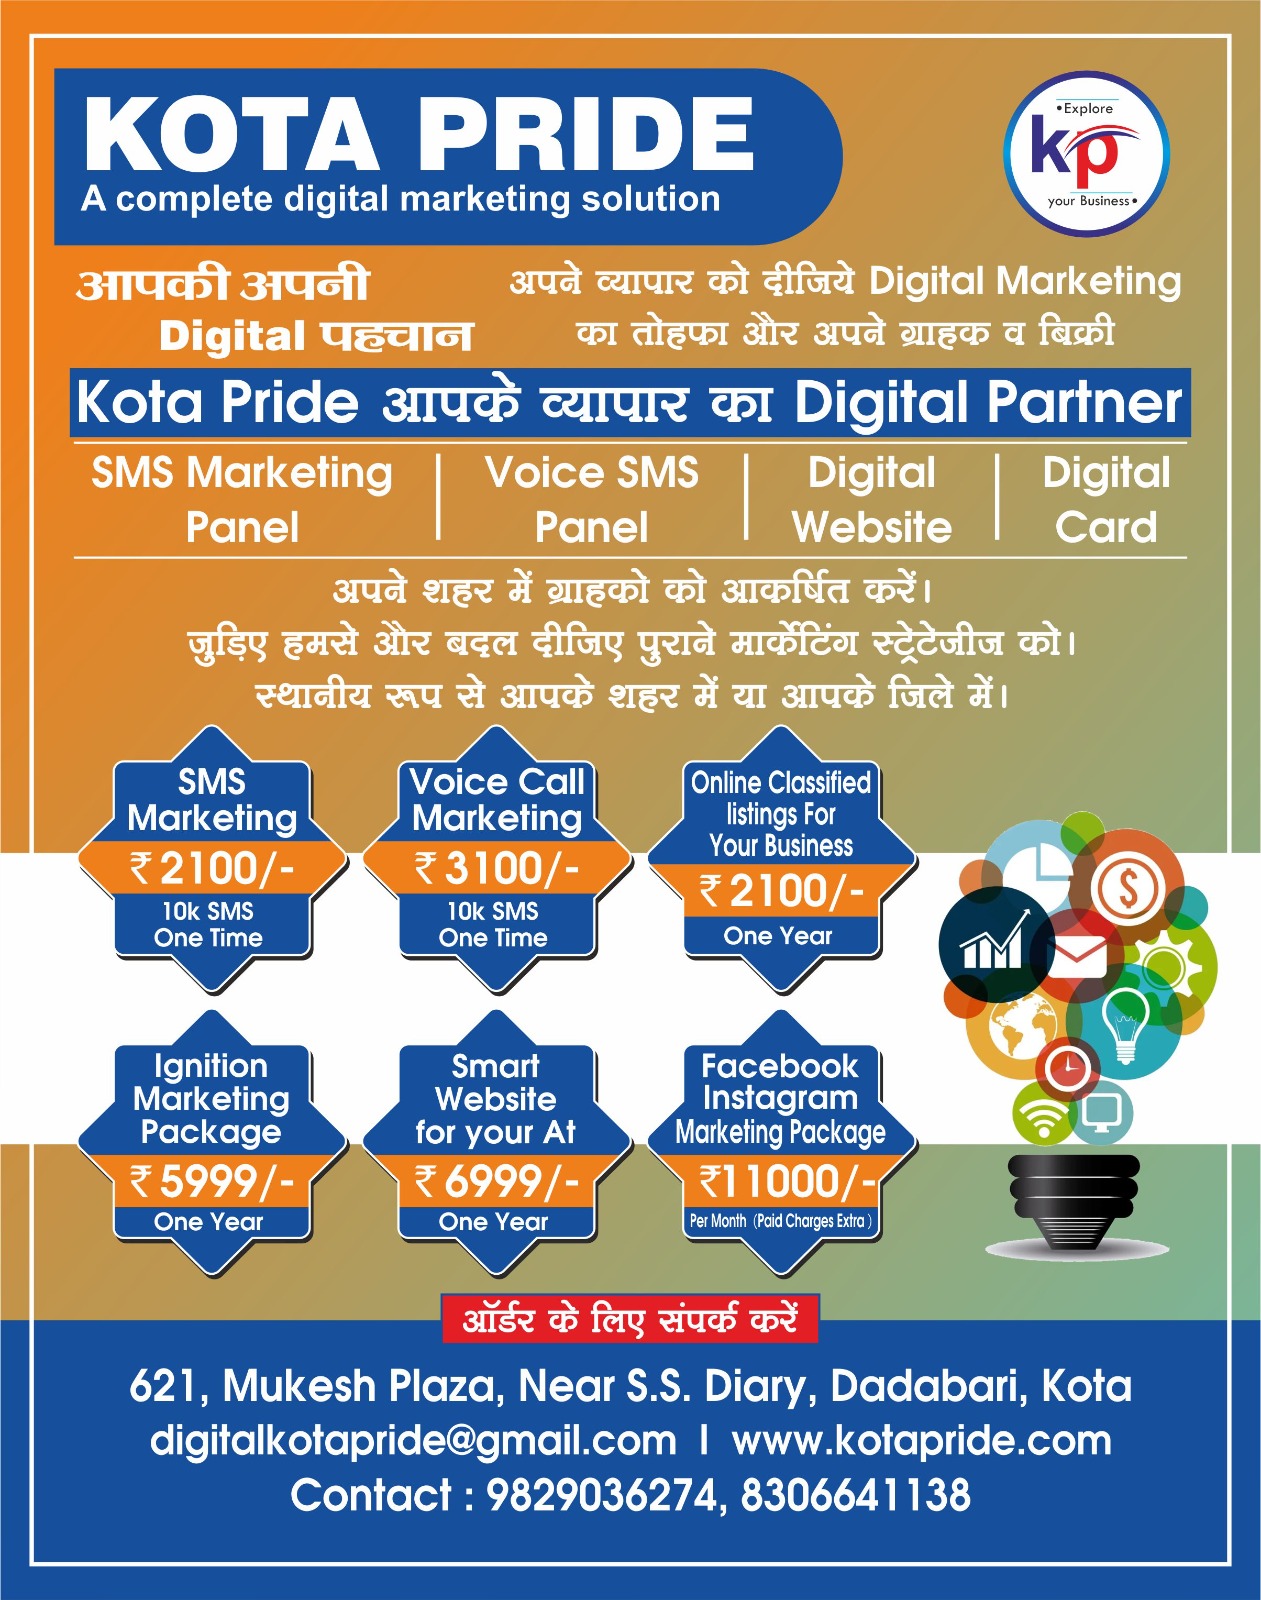 Digital Marketing services In Telangana Hydrabad